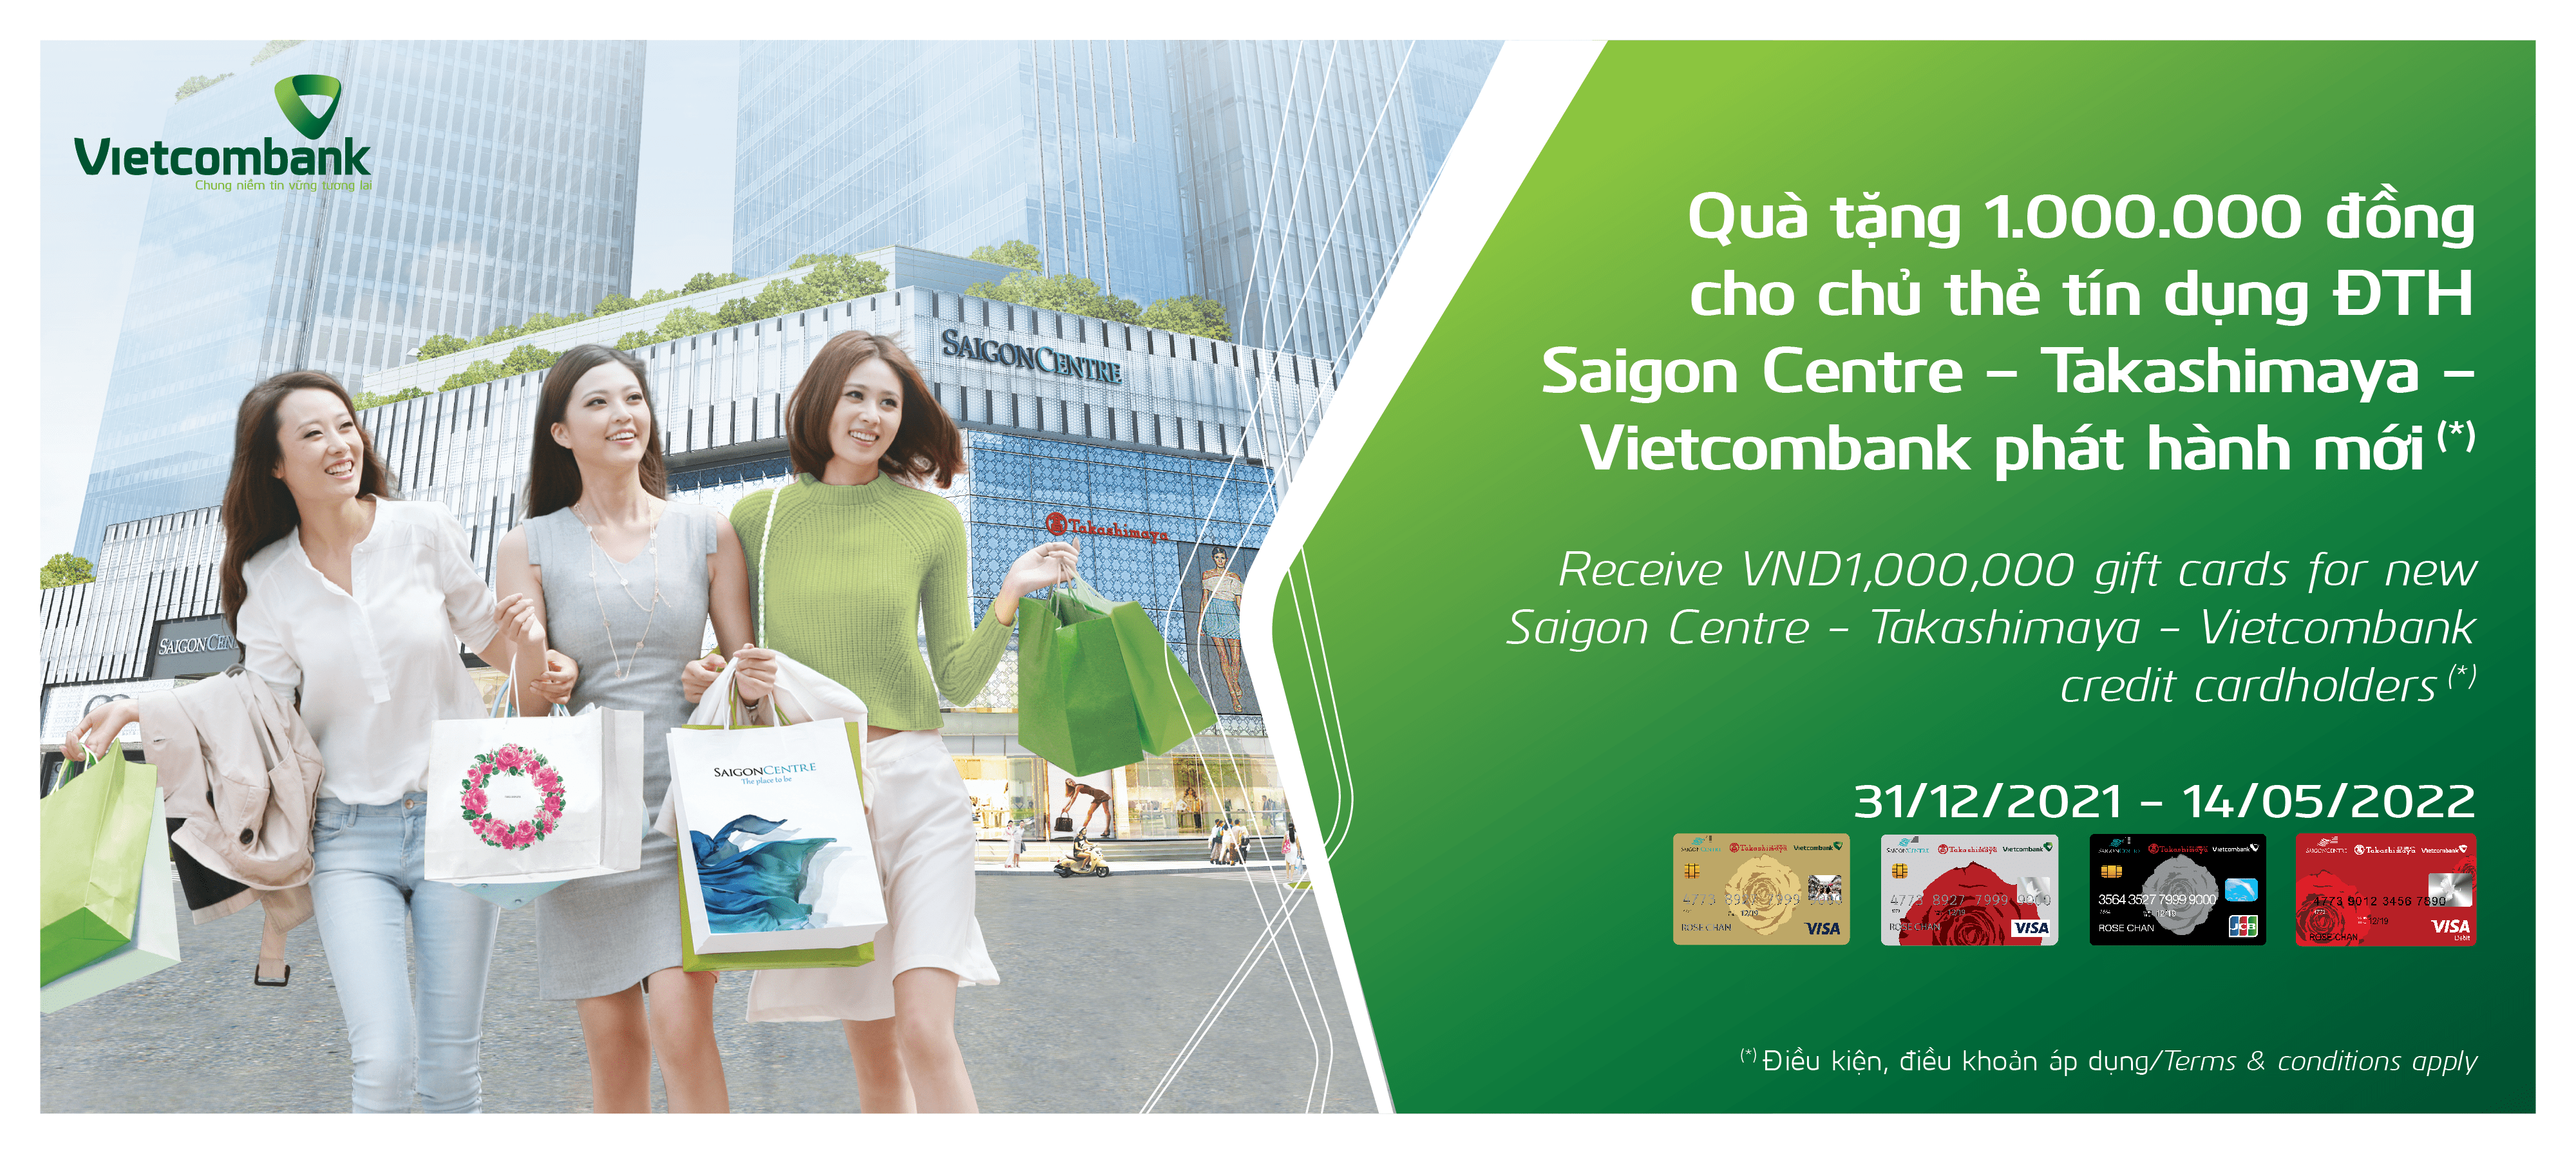 RECEIVE VND1,000,000 GIFT CARDS FOR NEW SAIGON CENTRE - TAKASHIMAYA - VIETCOMBANK CREDIT CARDHOLDERS